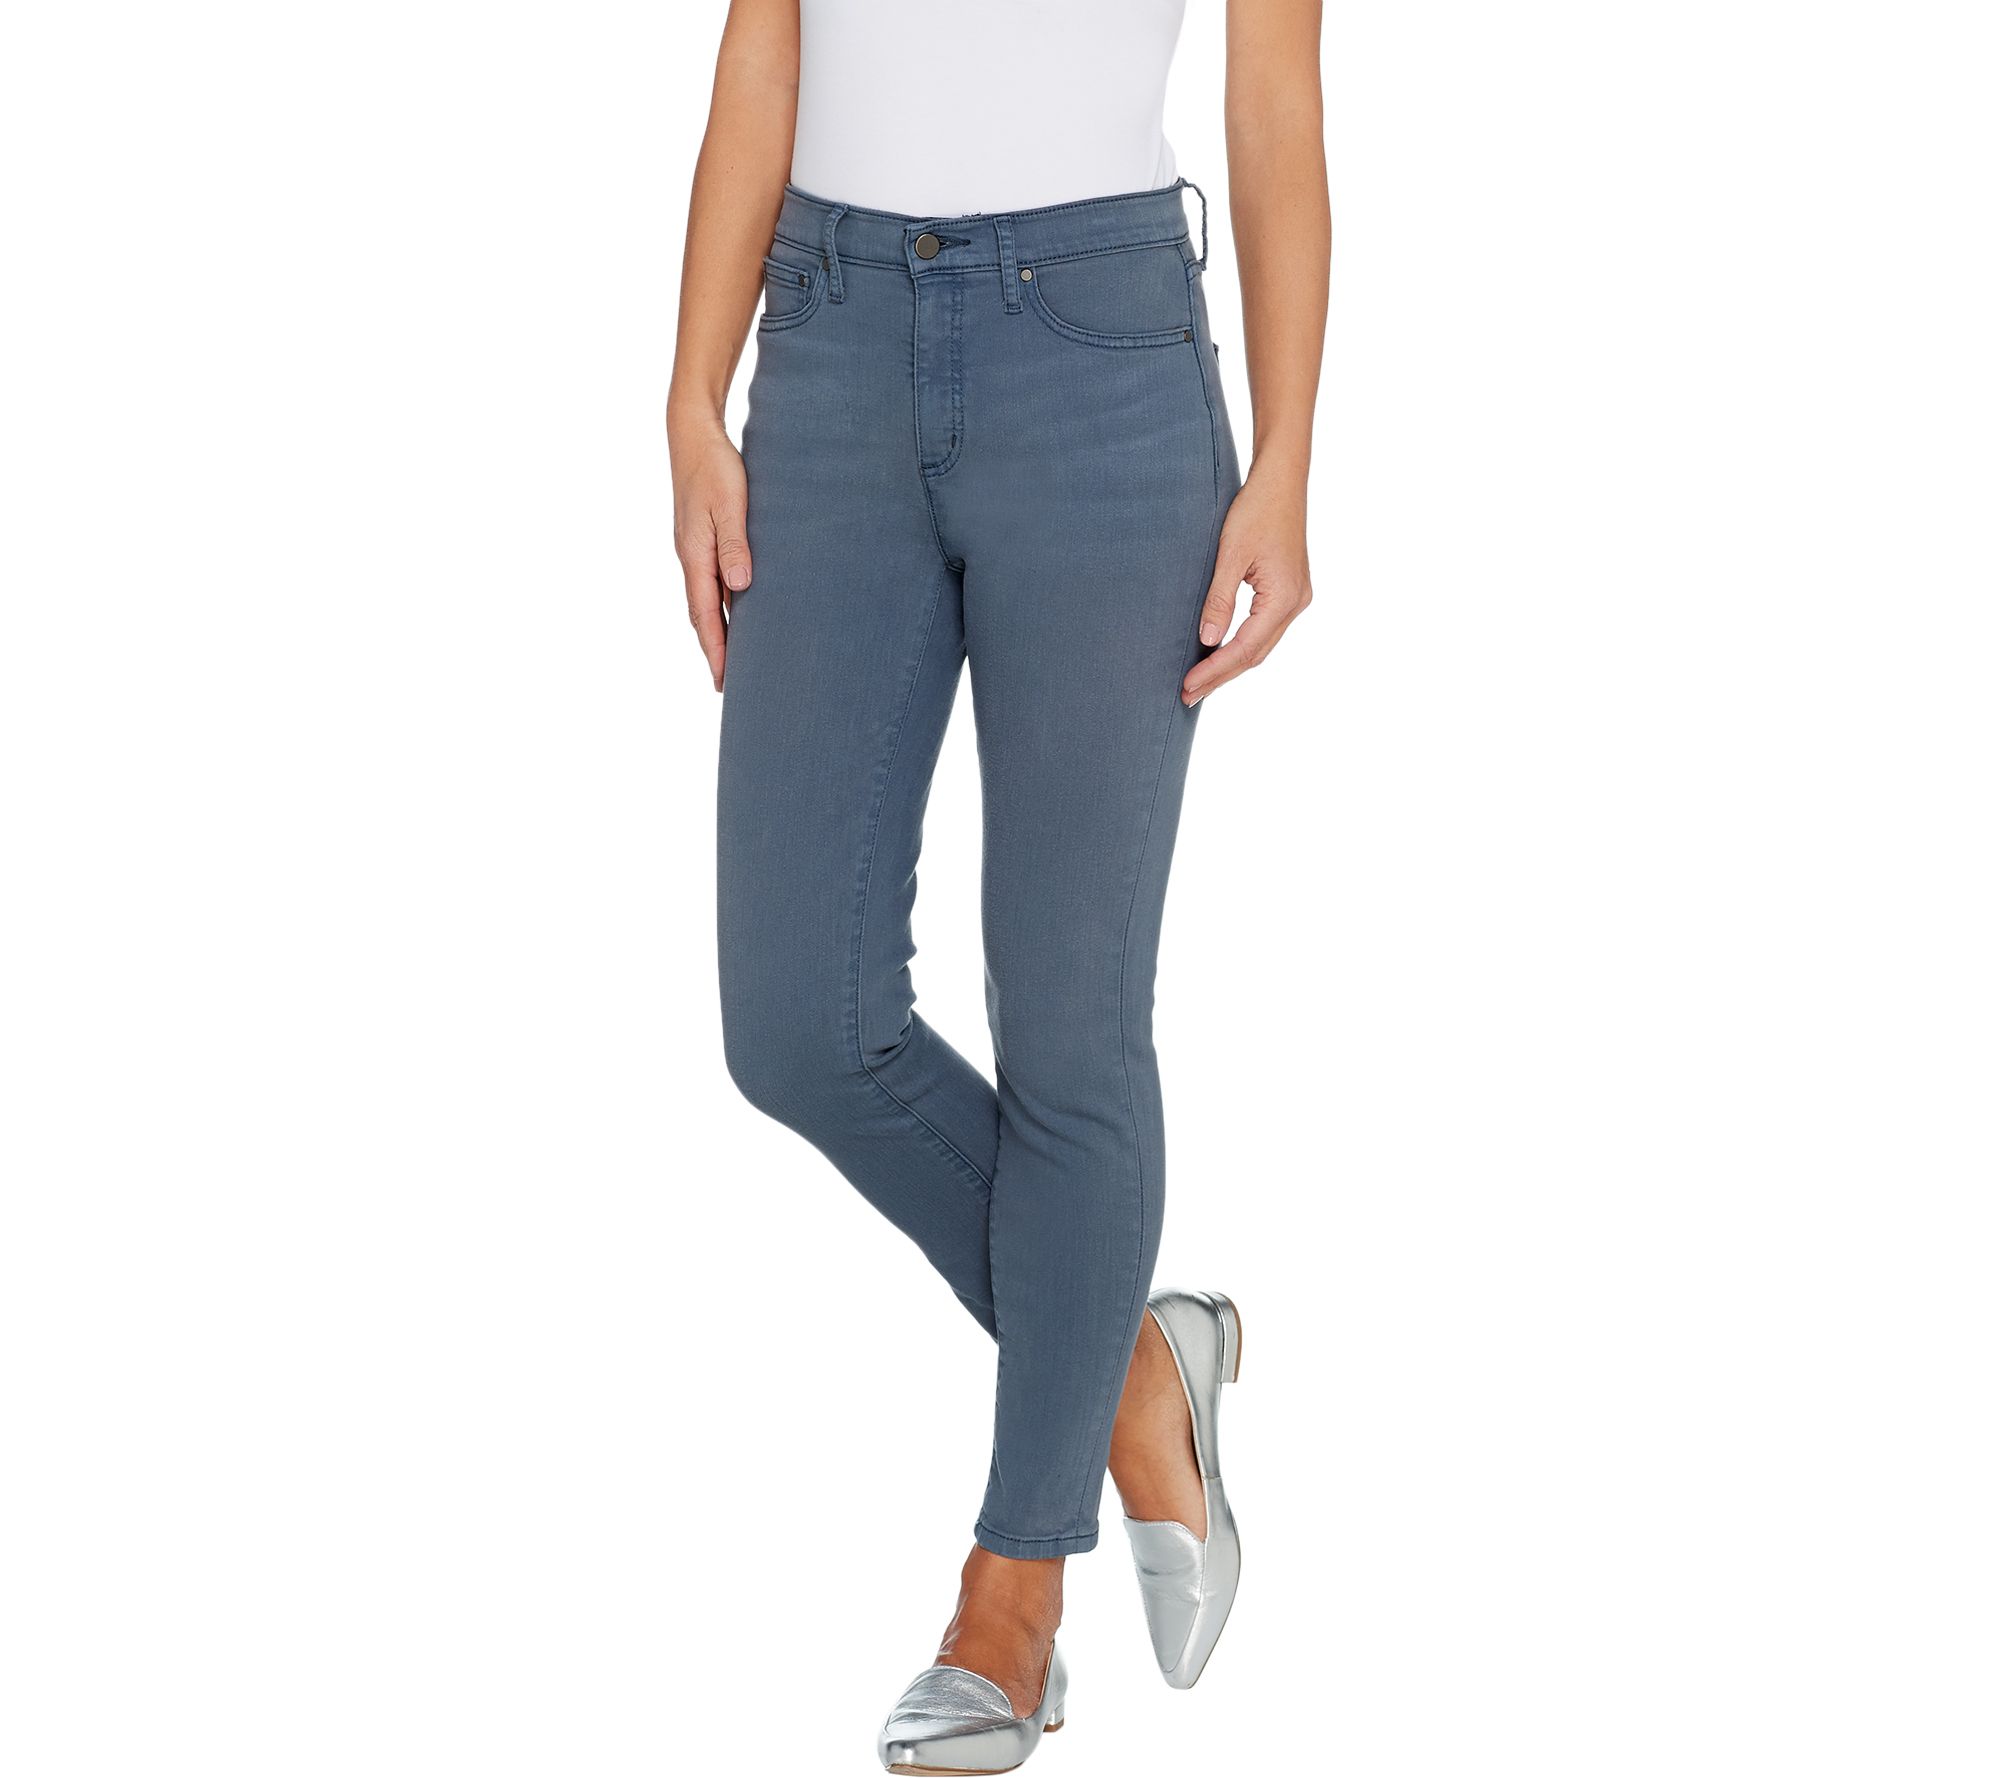 H by Halston Premier Denim Petite Ankle Length Skinny Jeans - QVC.com